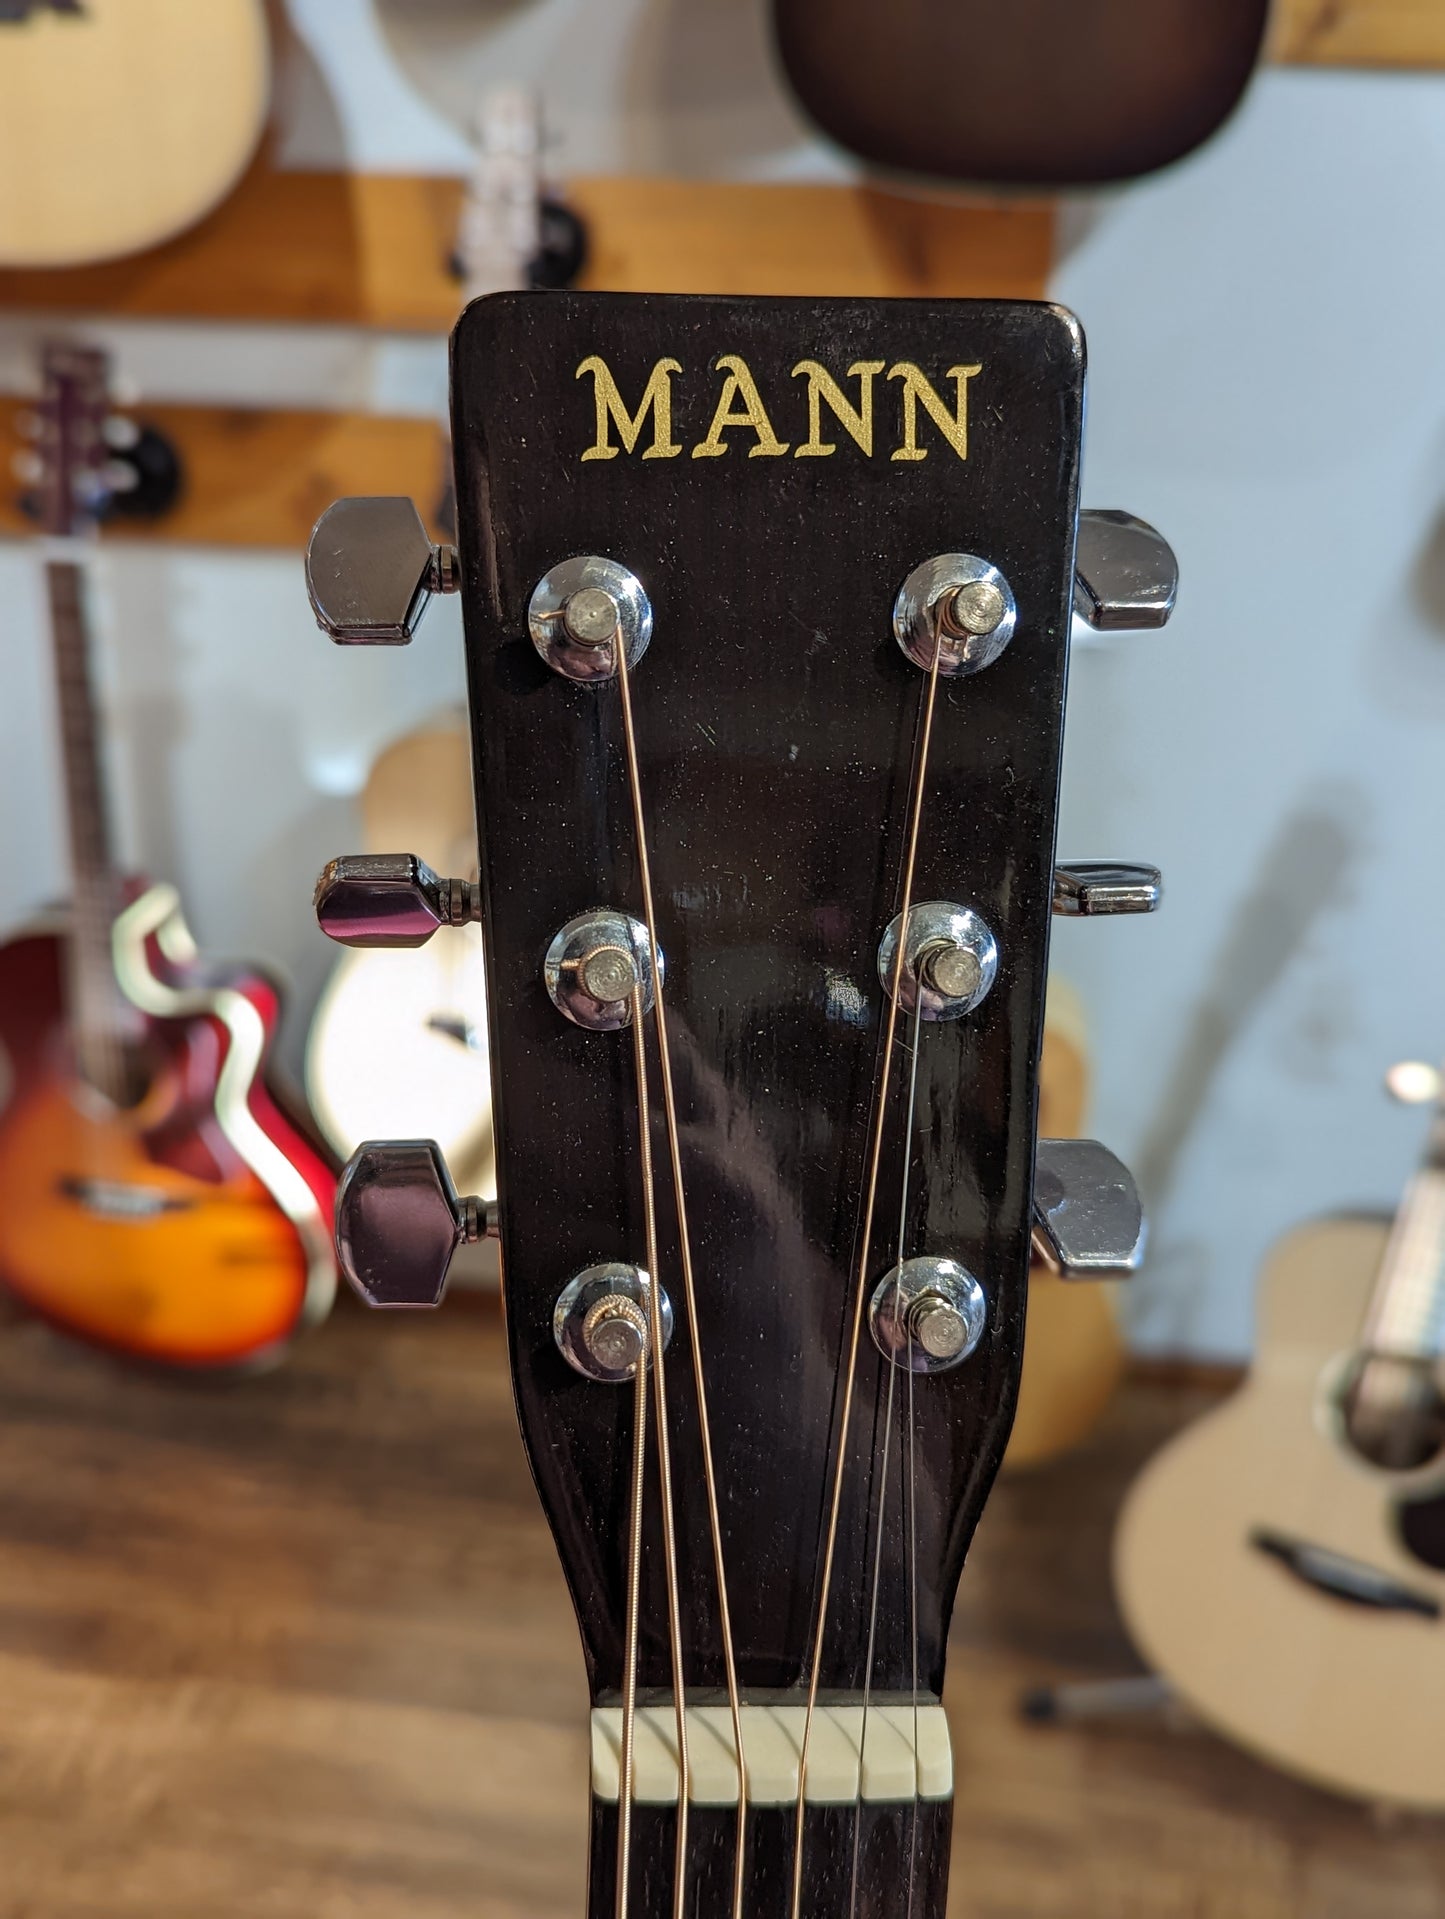 Mann AJ-205 OM Style Mahogany Acoustic Guitar w/Vintage Case (1980's)